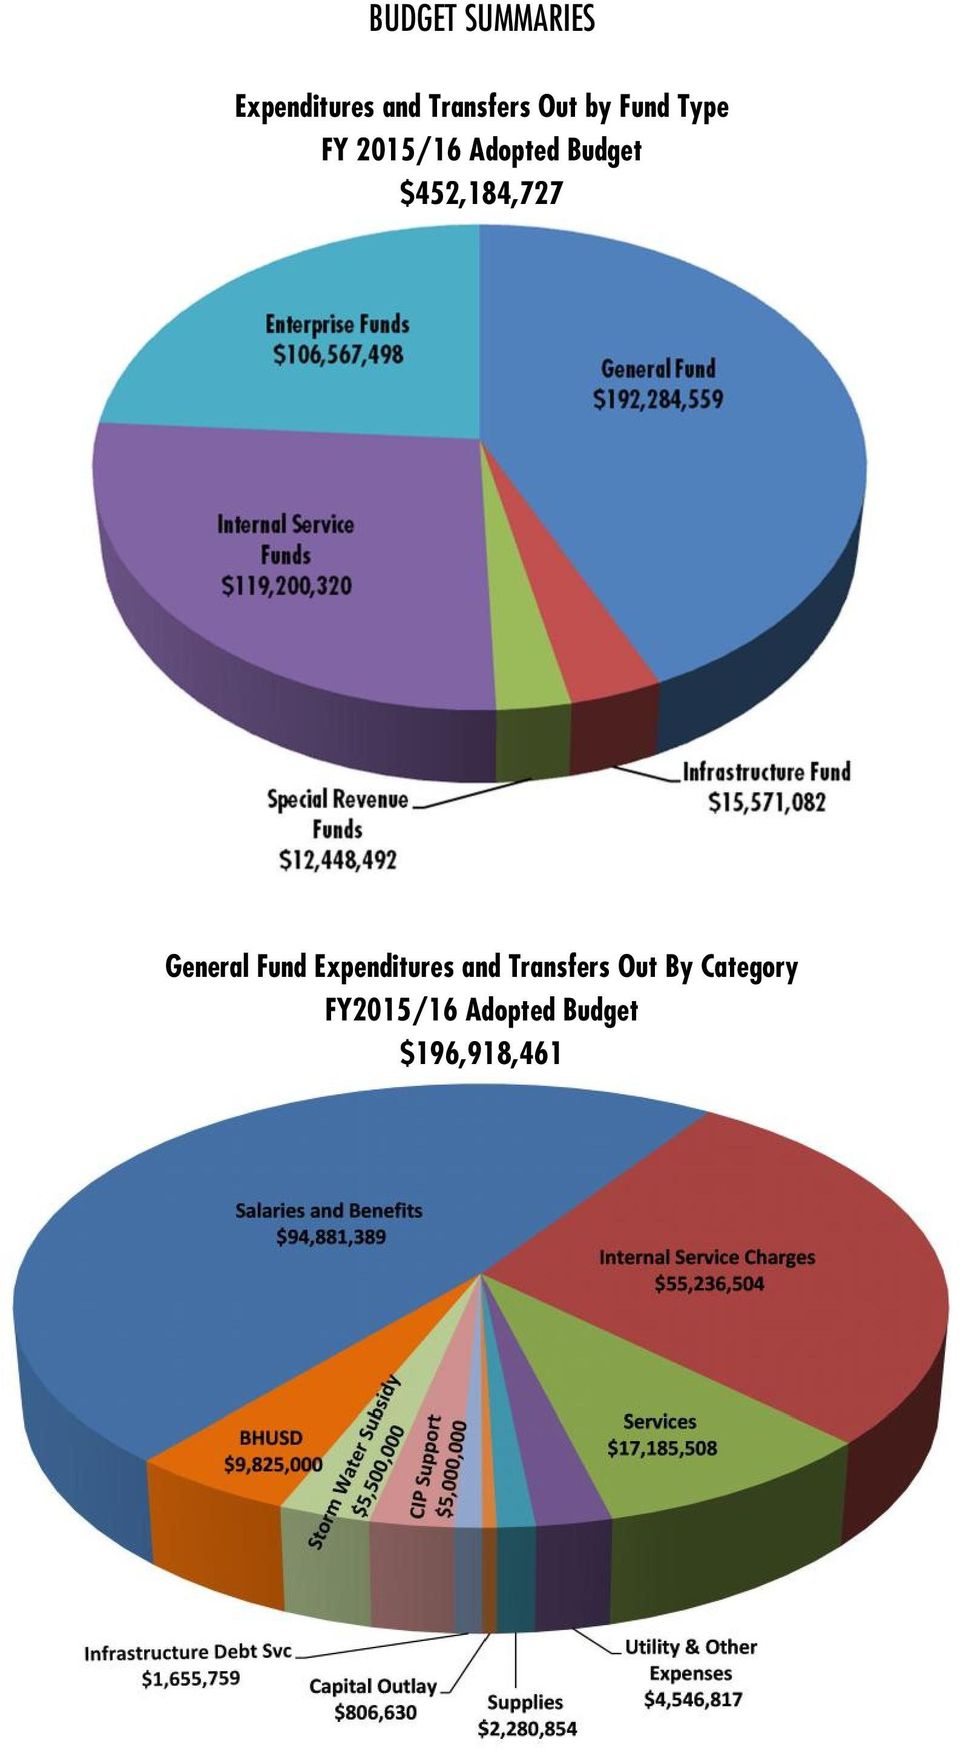 $452,184,727 General Fund Expenditures